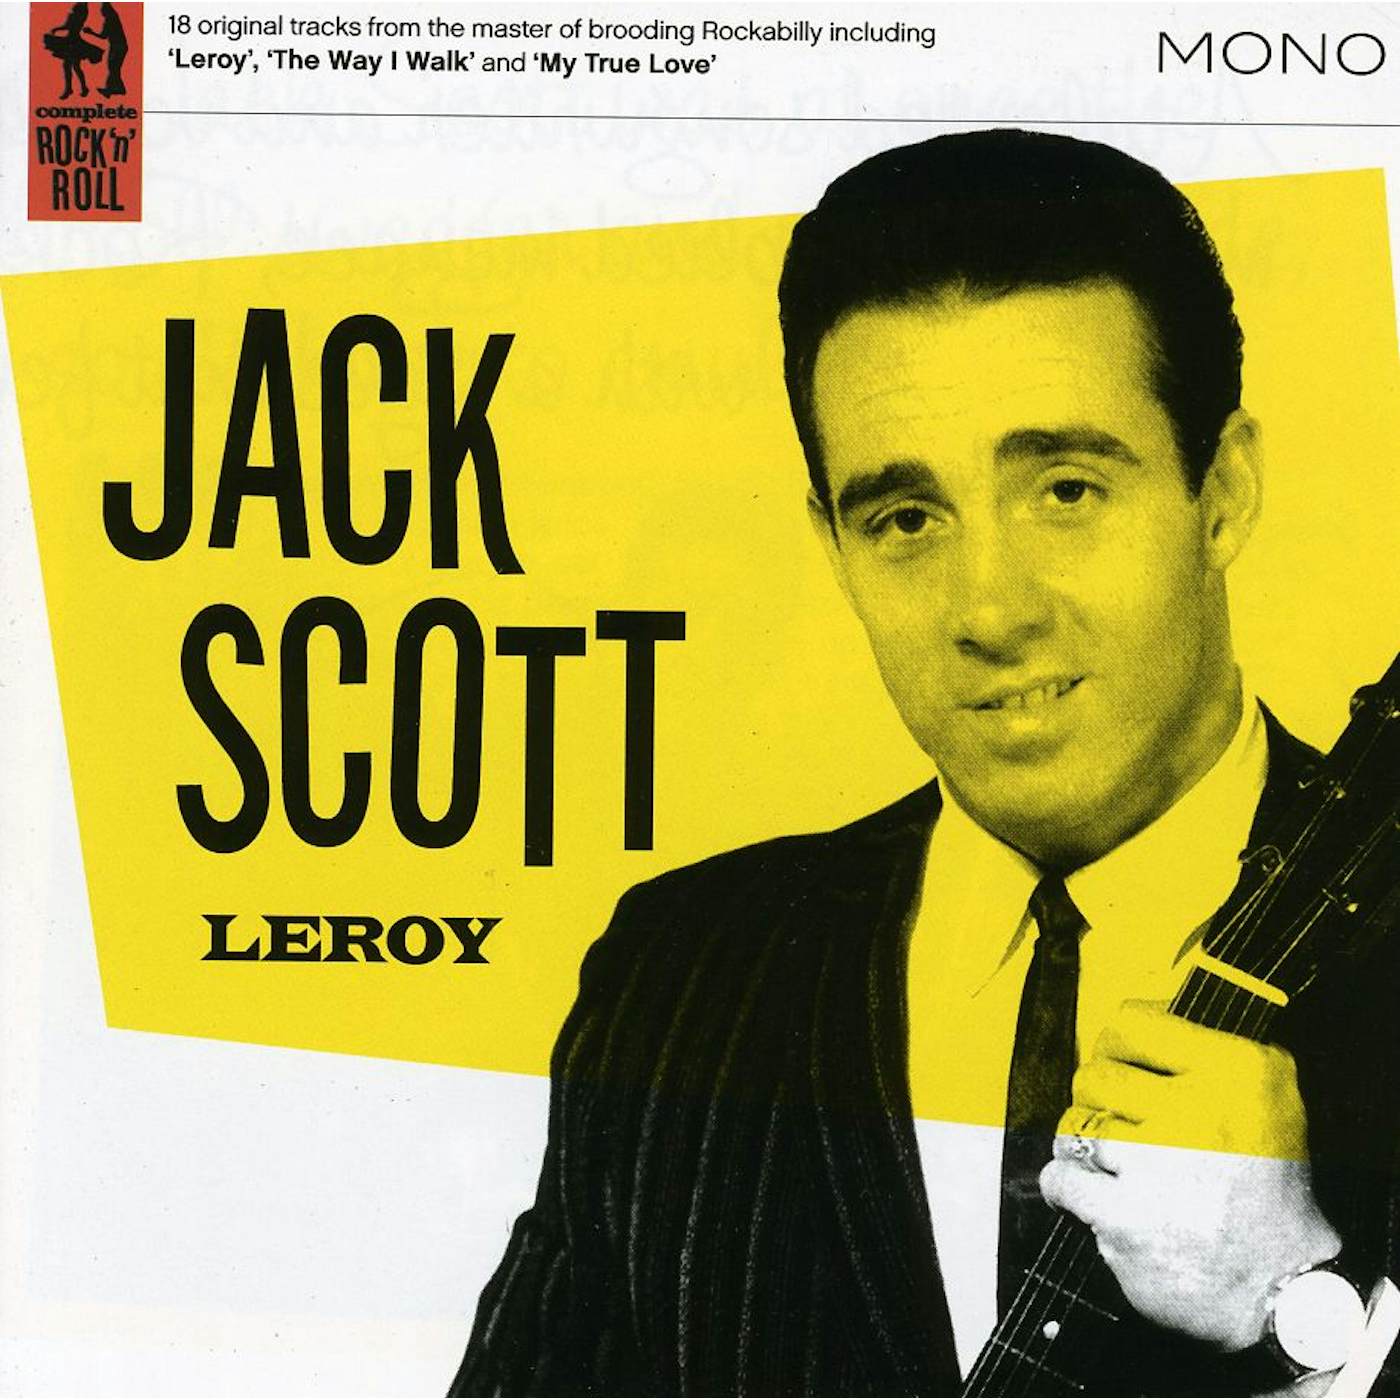 Jack Scott LEROY CD